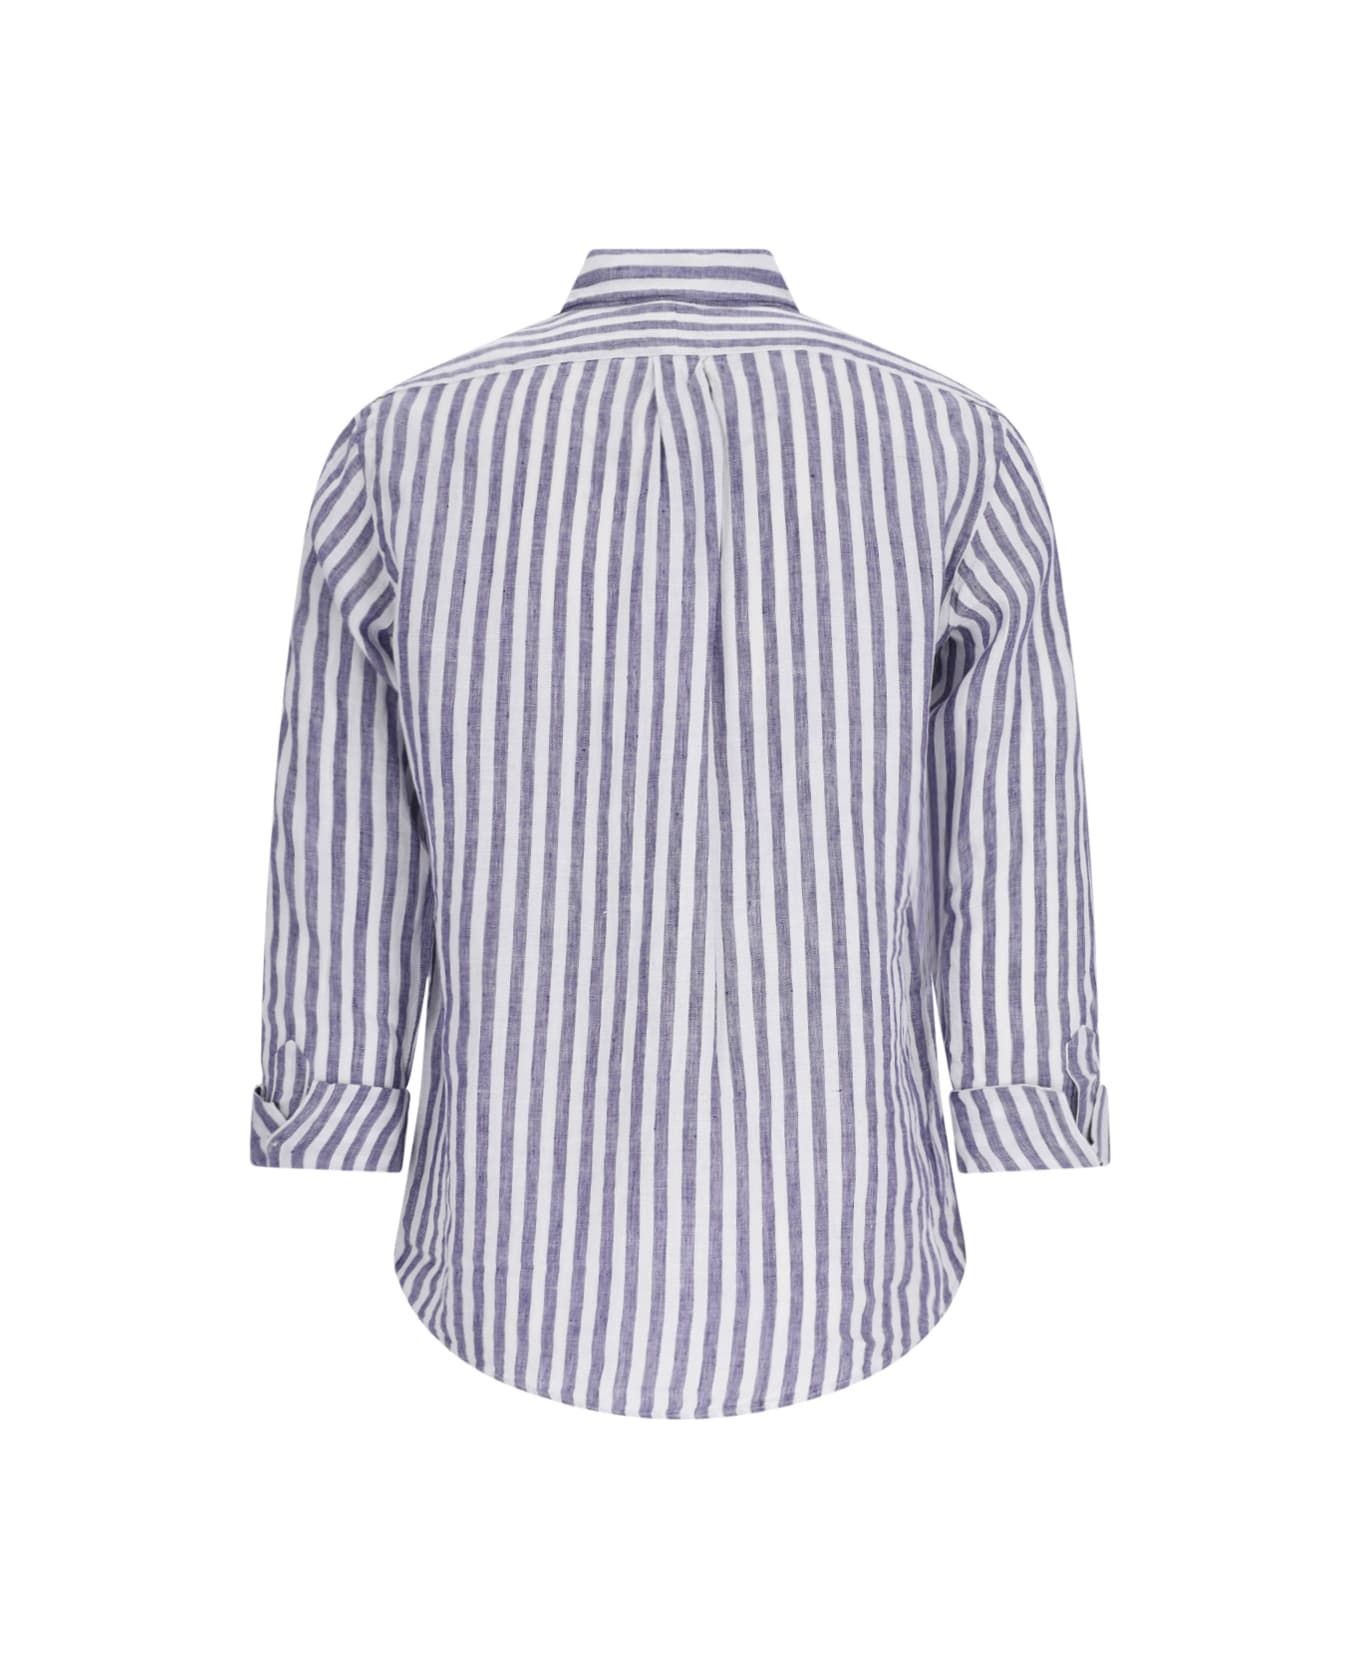 Polo Ralph Lauren Logo Shirt - Blue/white